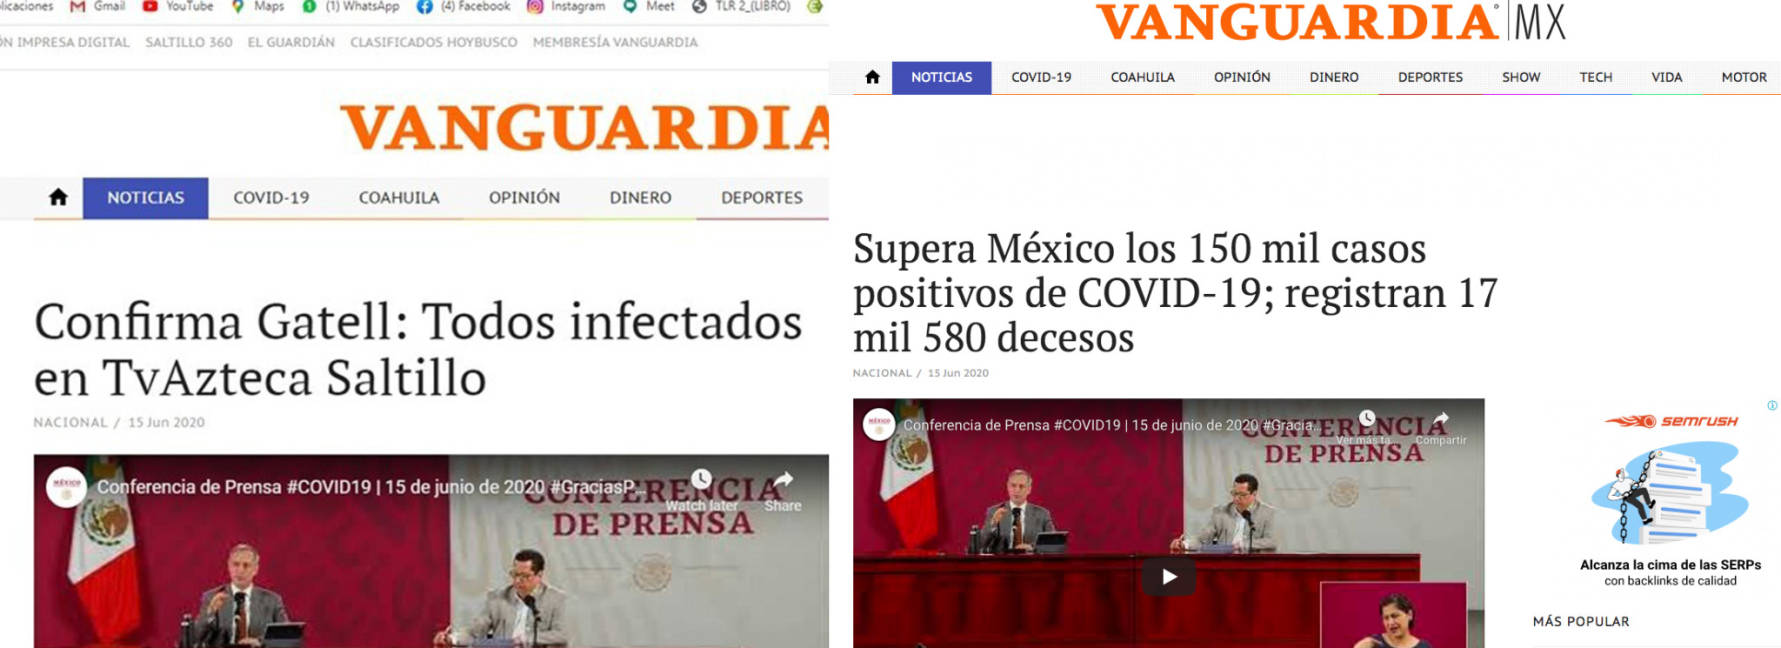 $!Falso que Vanguardia informara sobre brote de COVID-19 en otra televisora de Saltillo